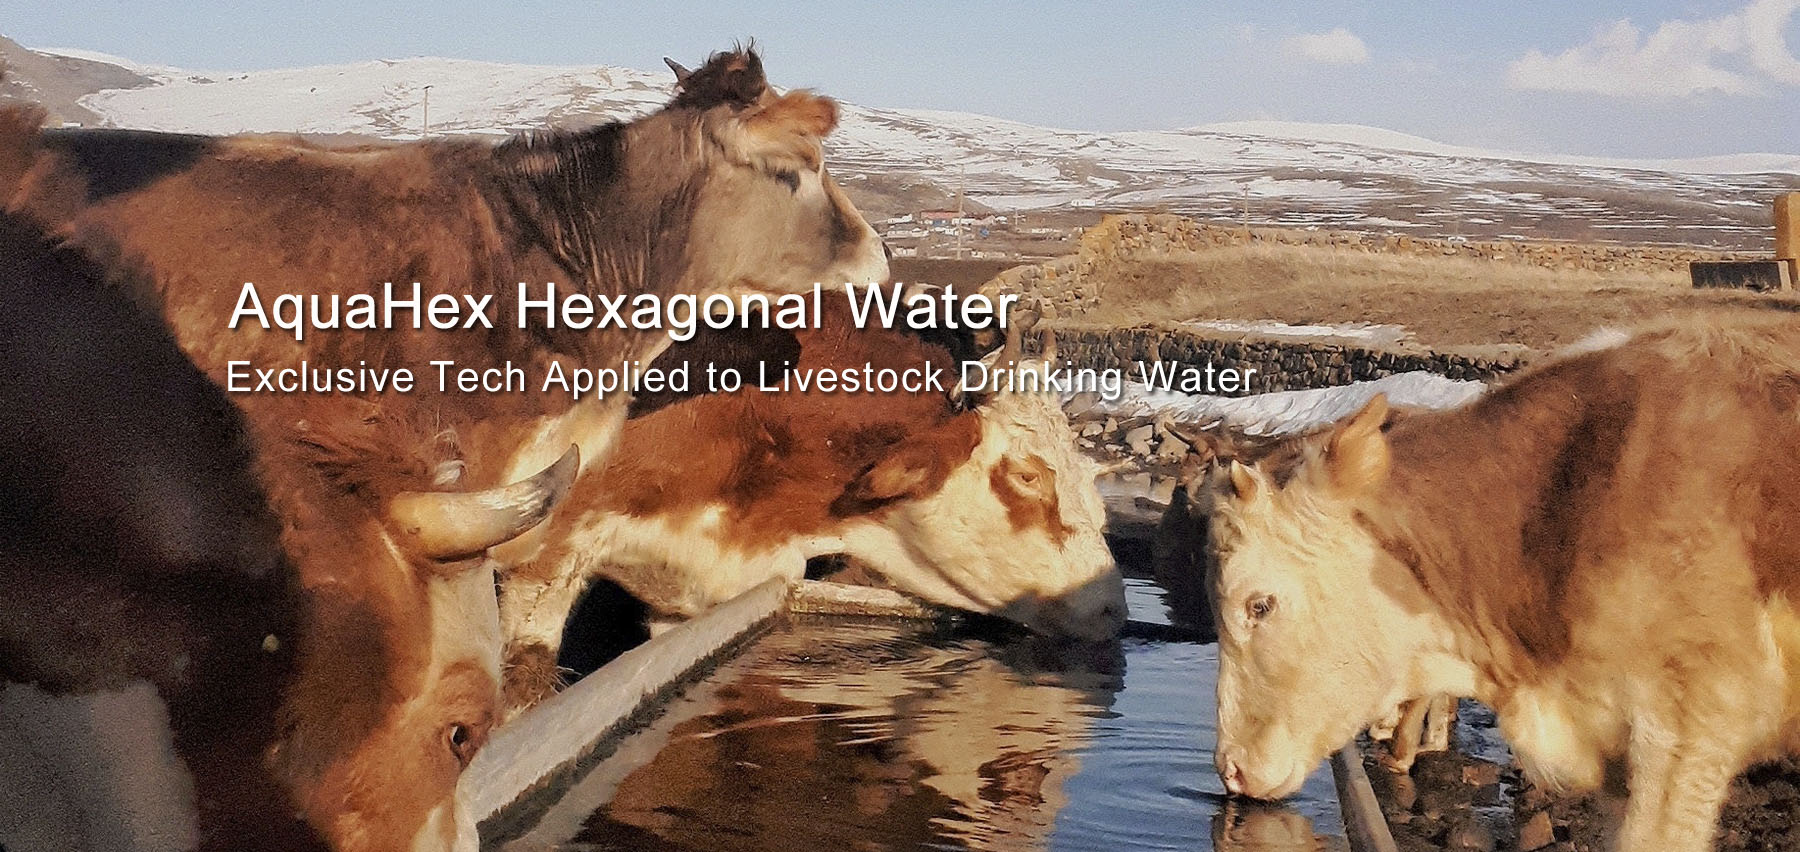 AquaHex hexagonal water for livestock drinking water